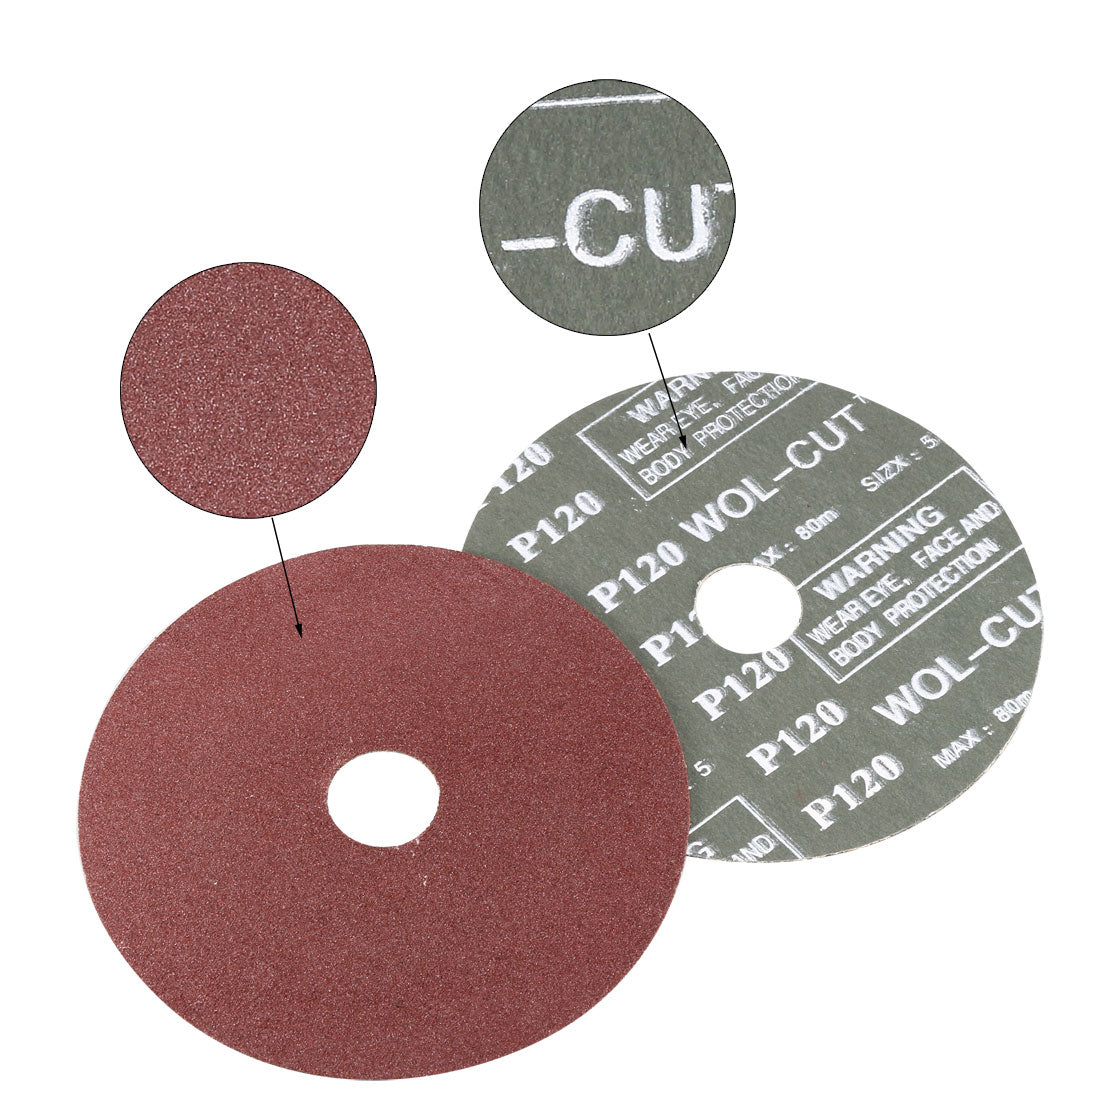 Uxcell Uxcell 5-Inch x 7/8-Inch Aluminum Oxide Resin Fiber Discs, Center Hole 120 Grit Sanding Grinding Discs, 5 Pcs